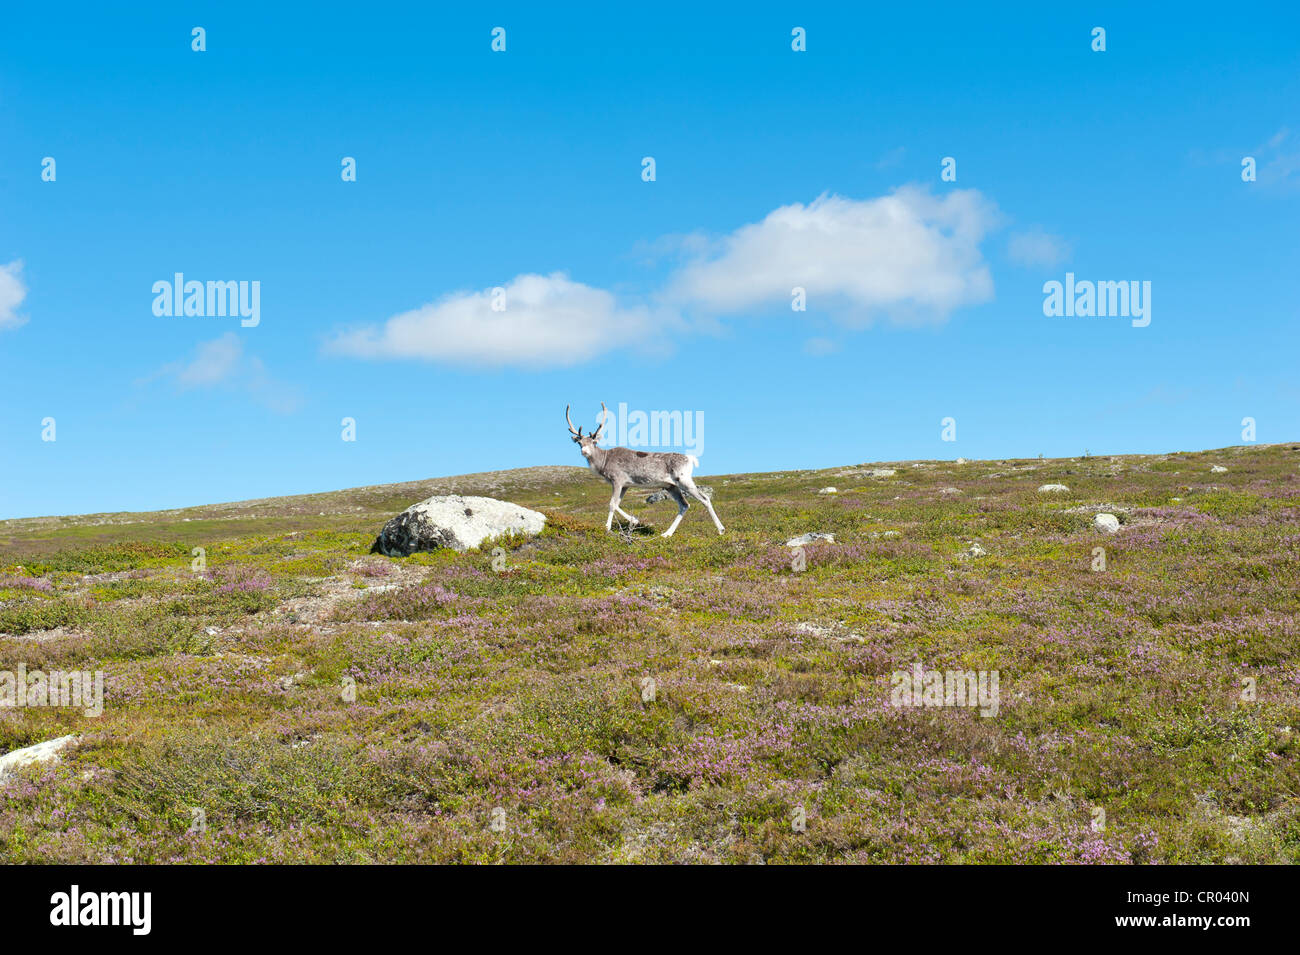 Rentier (Rangifer Tarandus), Wandern in den Bergen, Langfjaellet Nature Reserve in der Nähe von Groevelsjoen, Provinz Dalarna, Schweden Stockfoto